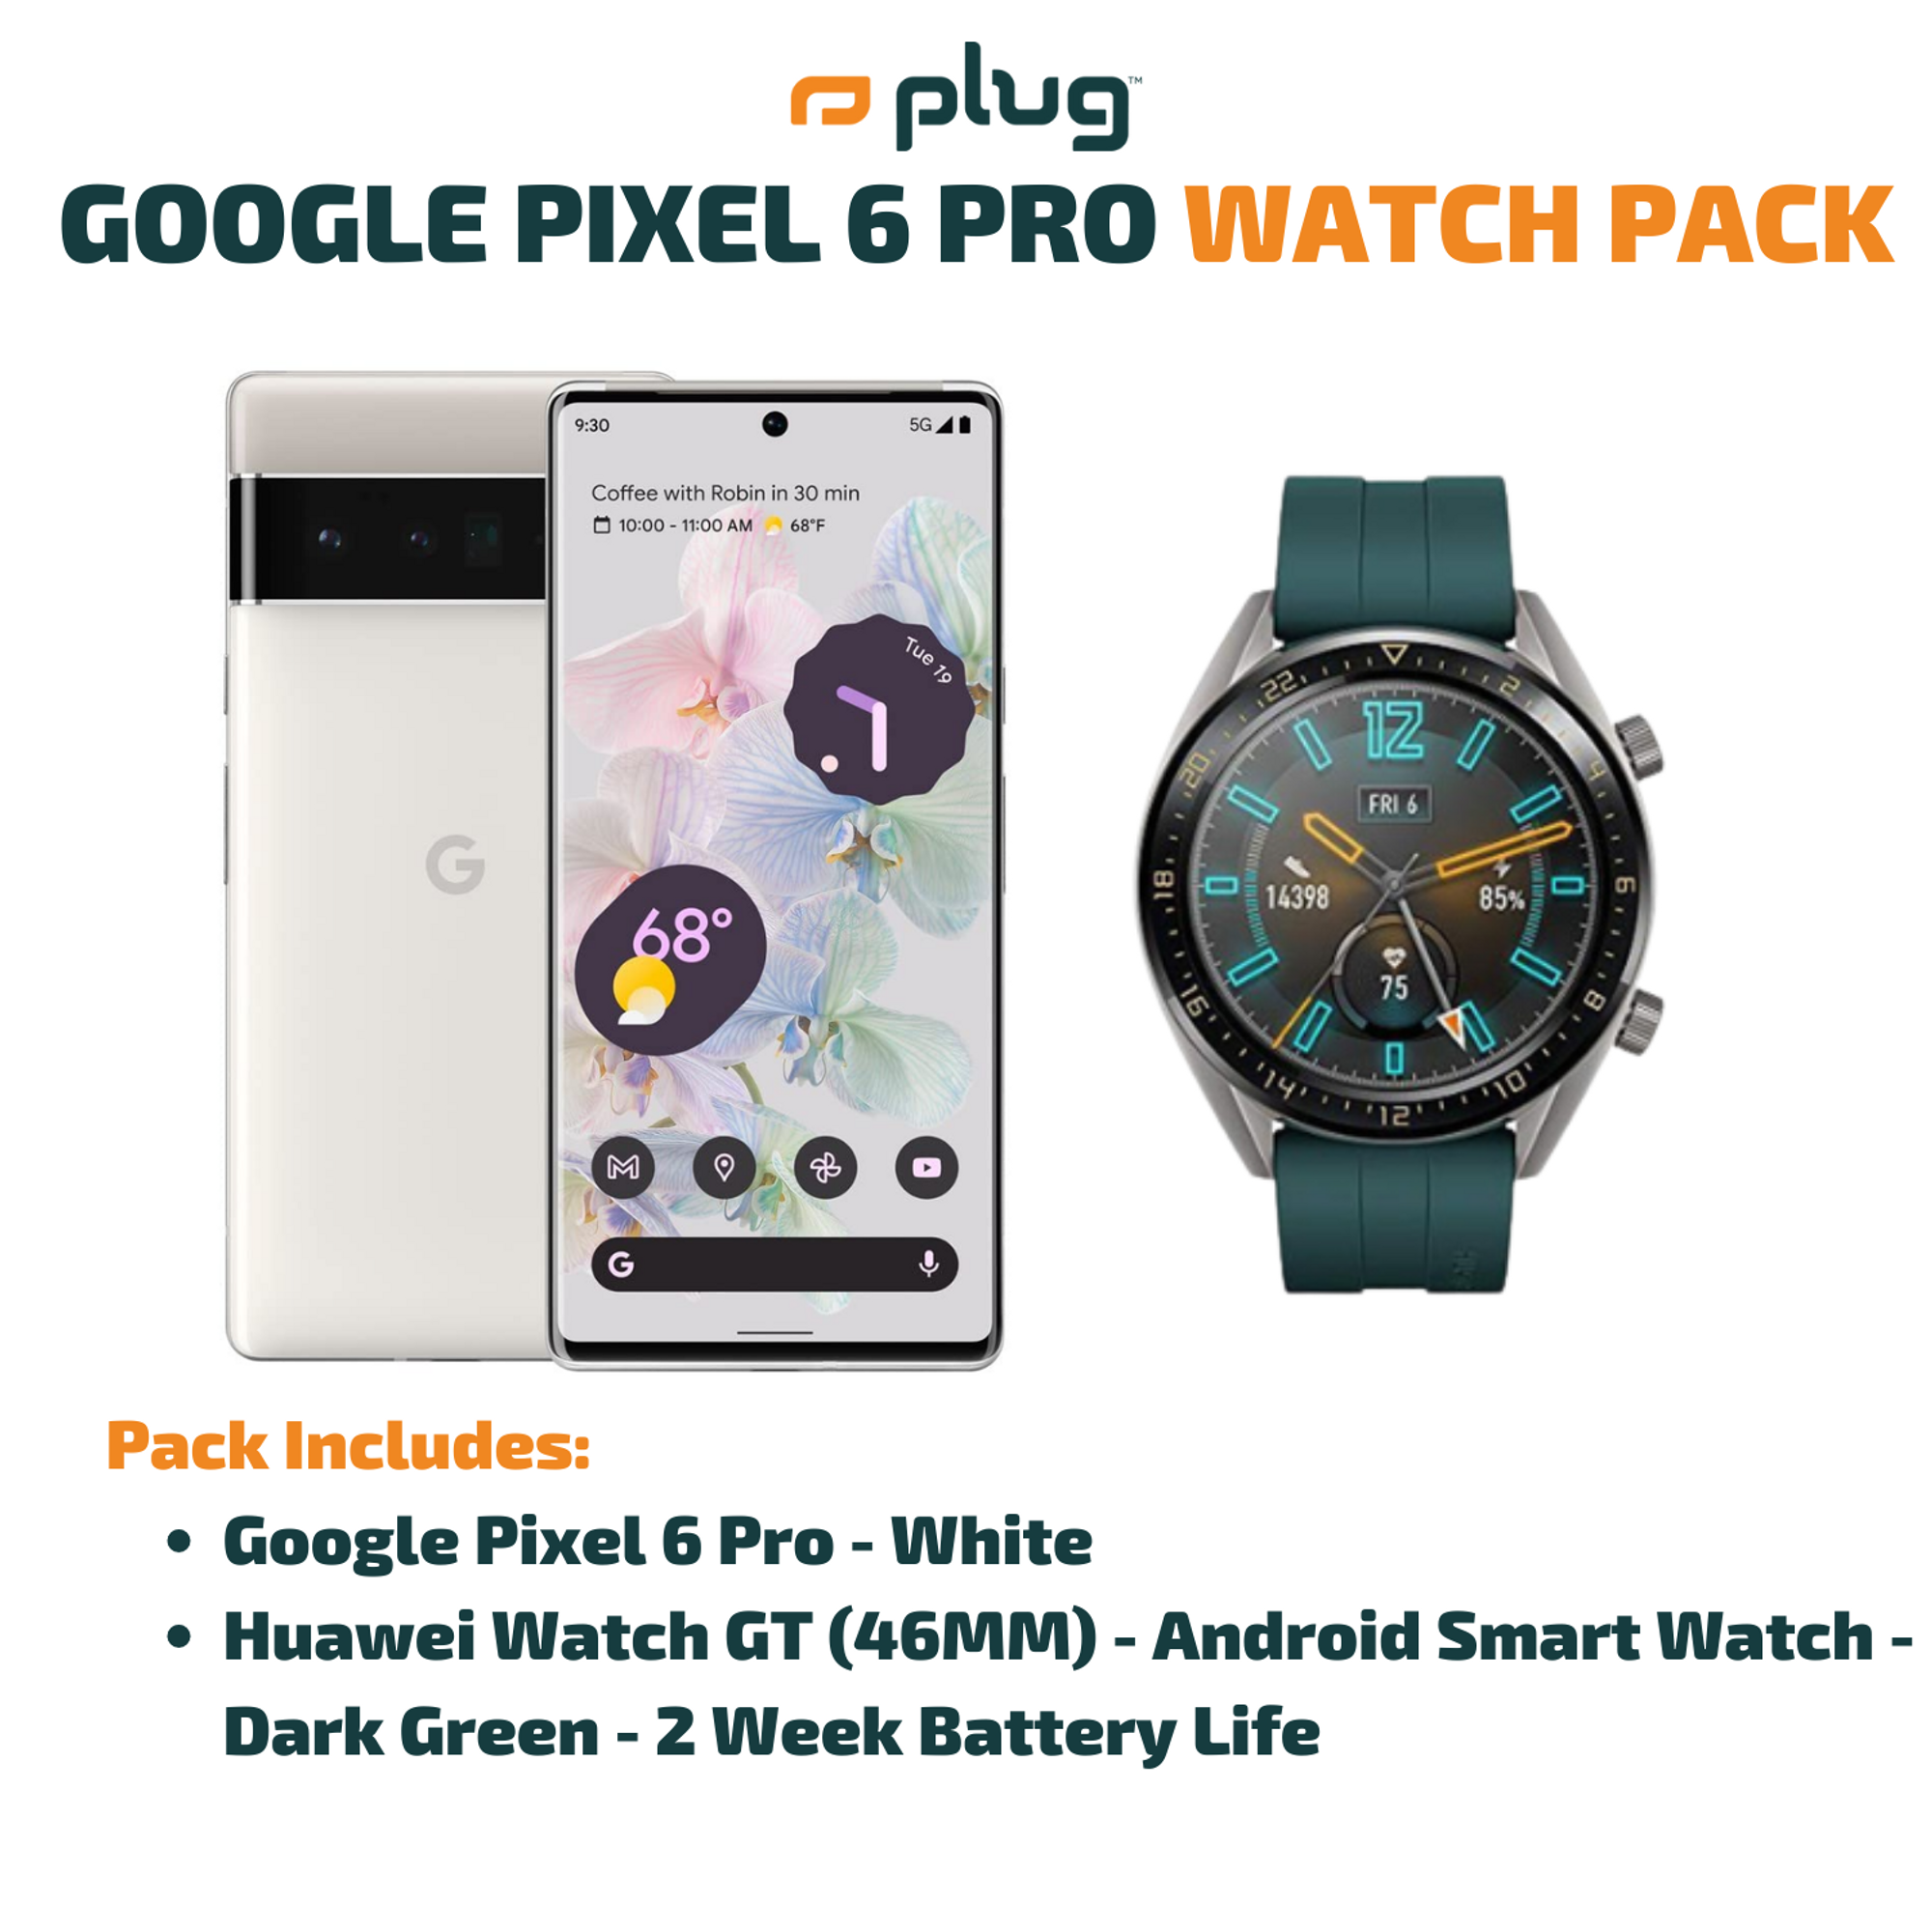 Google Pixel 6 Pro + Watch Pack